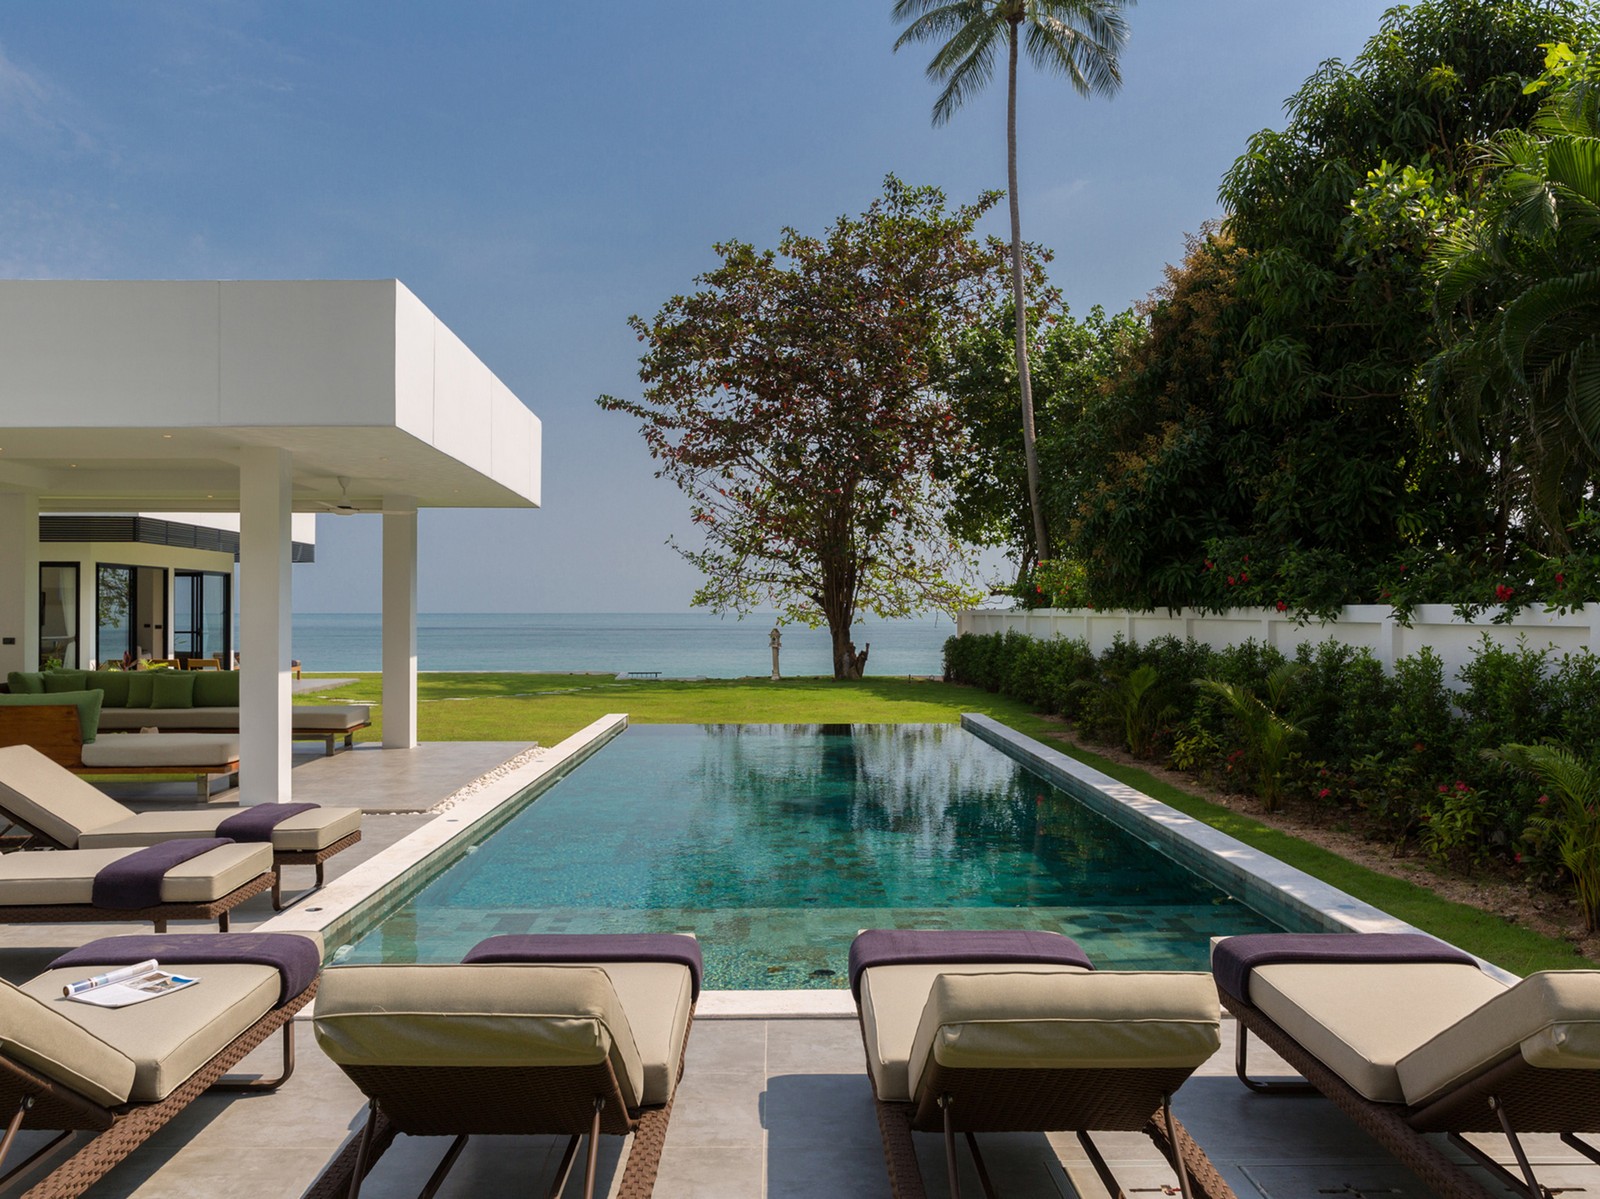 01 villa thansamaay breezy pool area overlooking the ocean